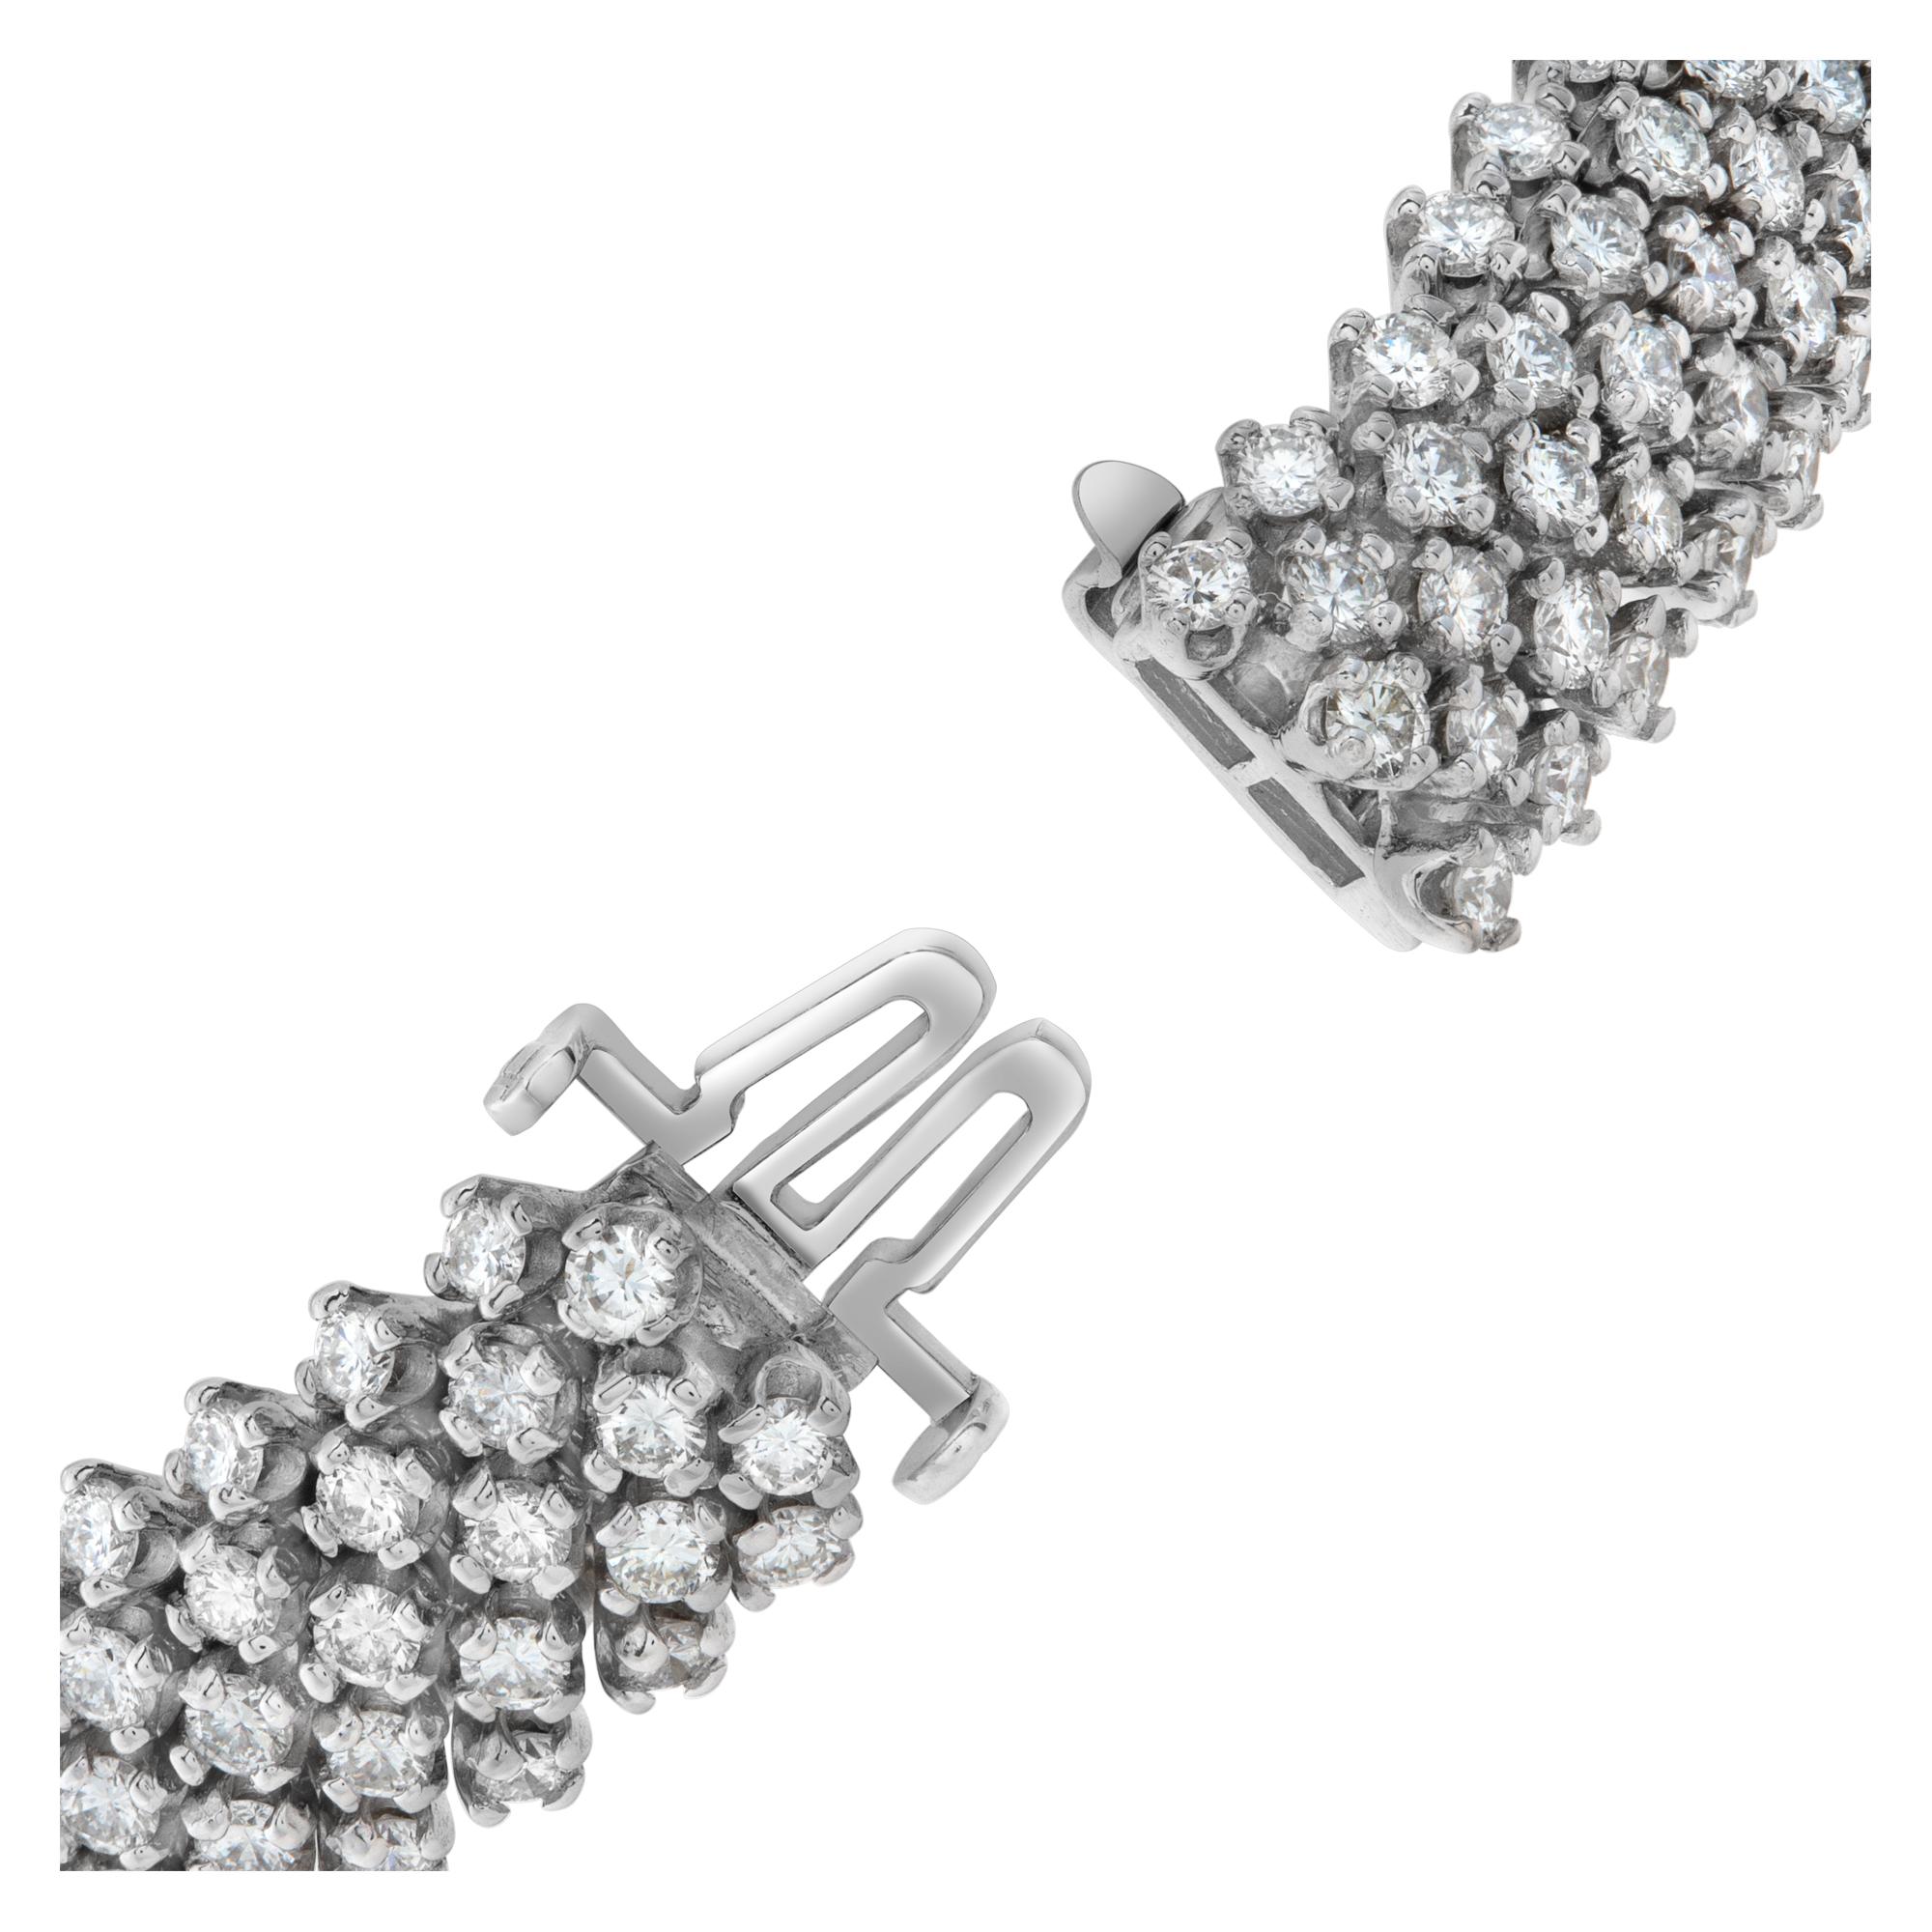 Women's Stunning 5 rows diamond line bracelet in 18k white gold. Over 9 carats-